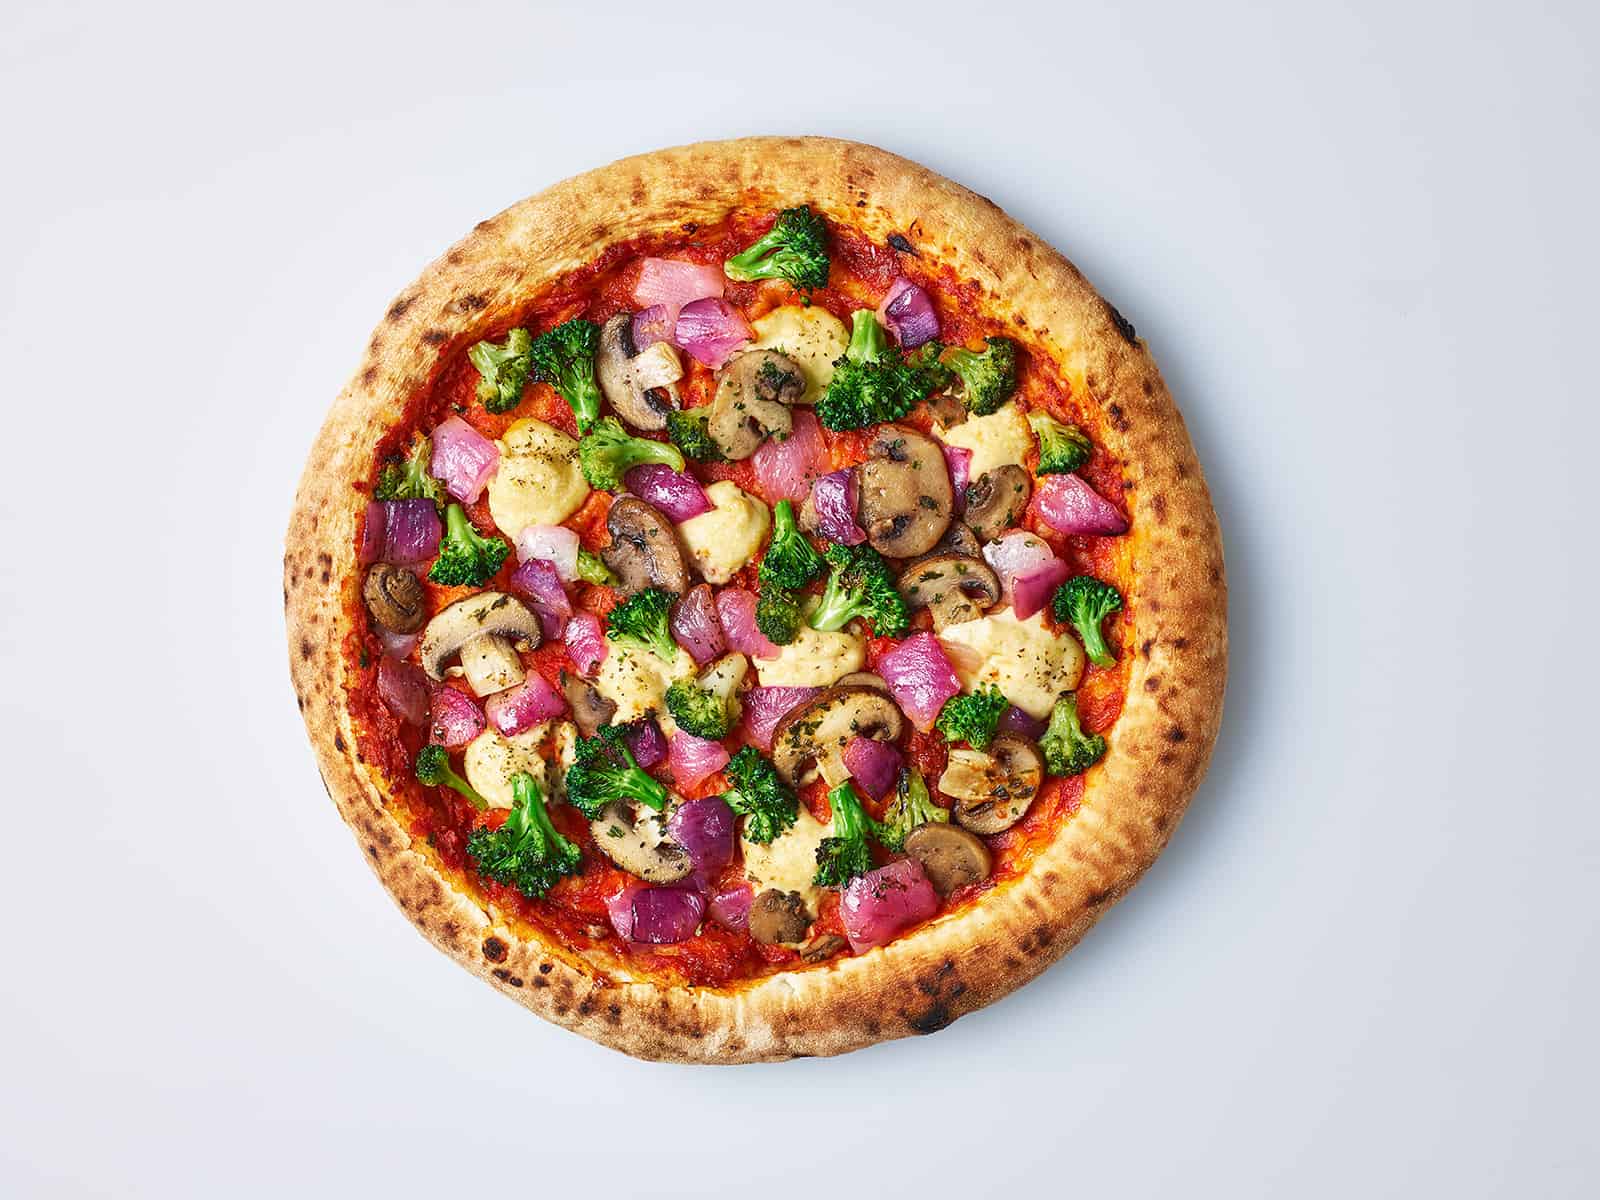 Introducing: The best vegan pizza on supermarket shelves